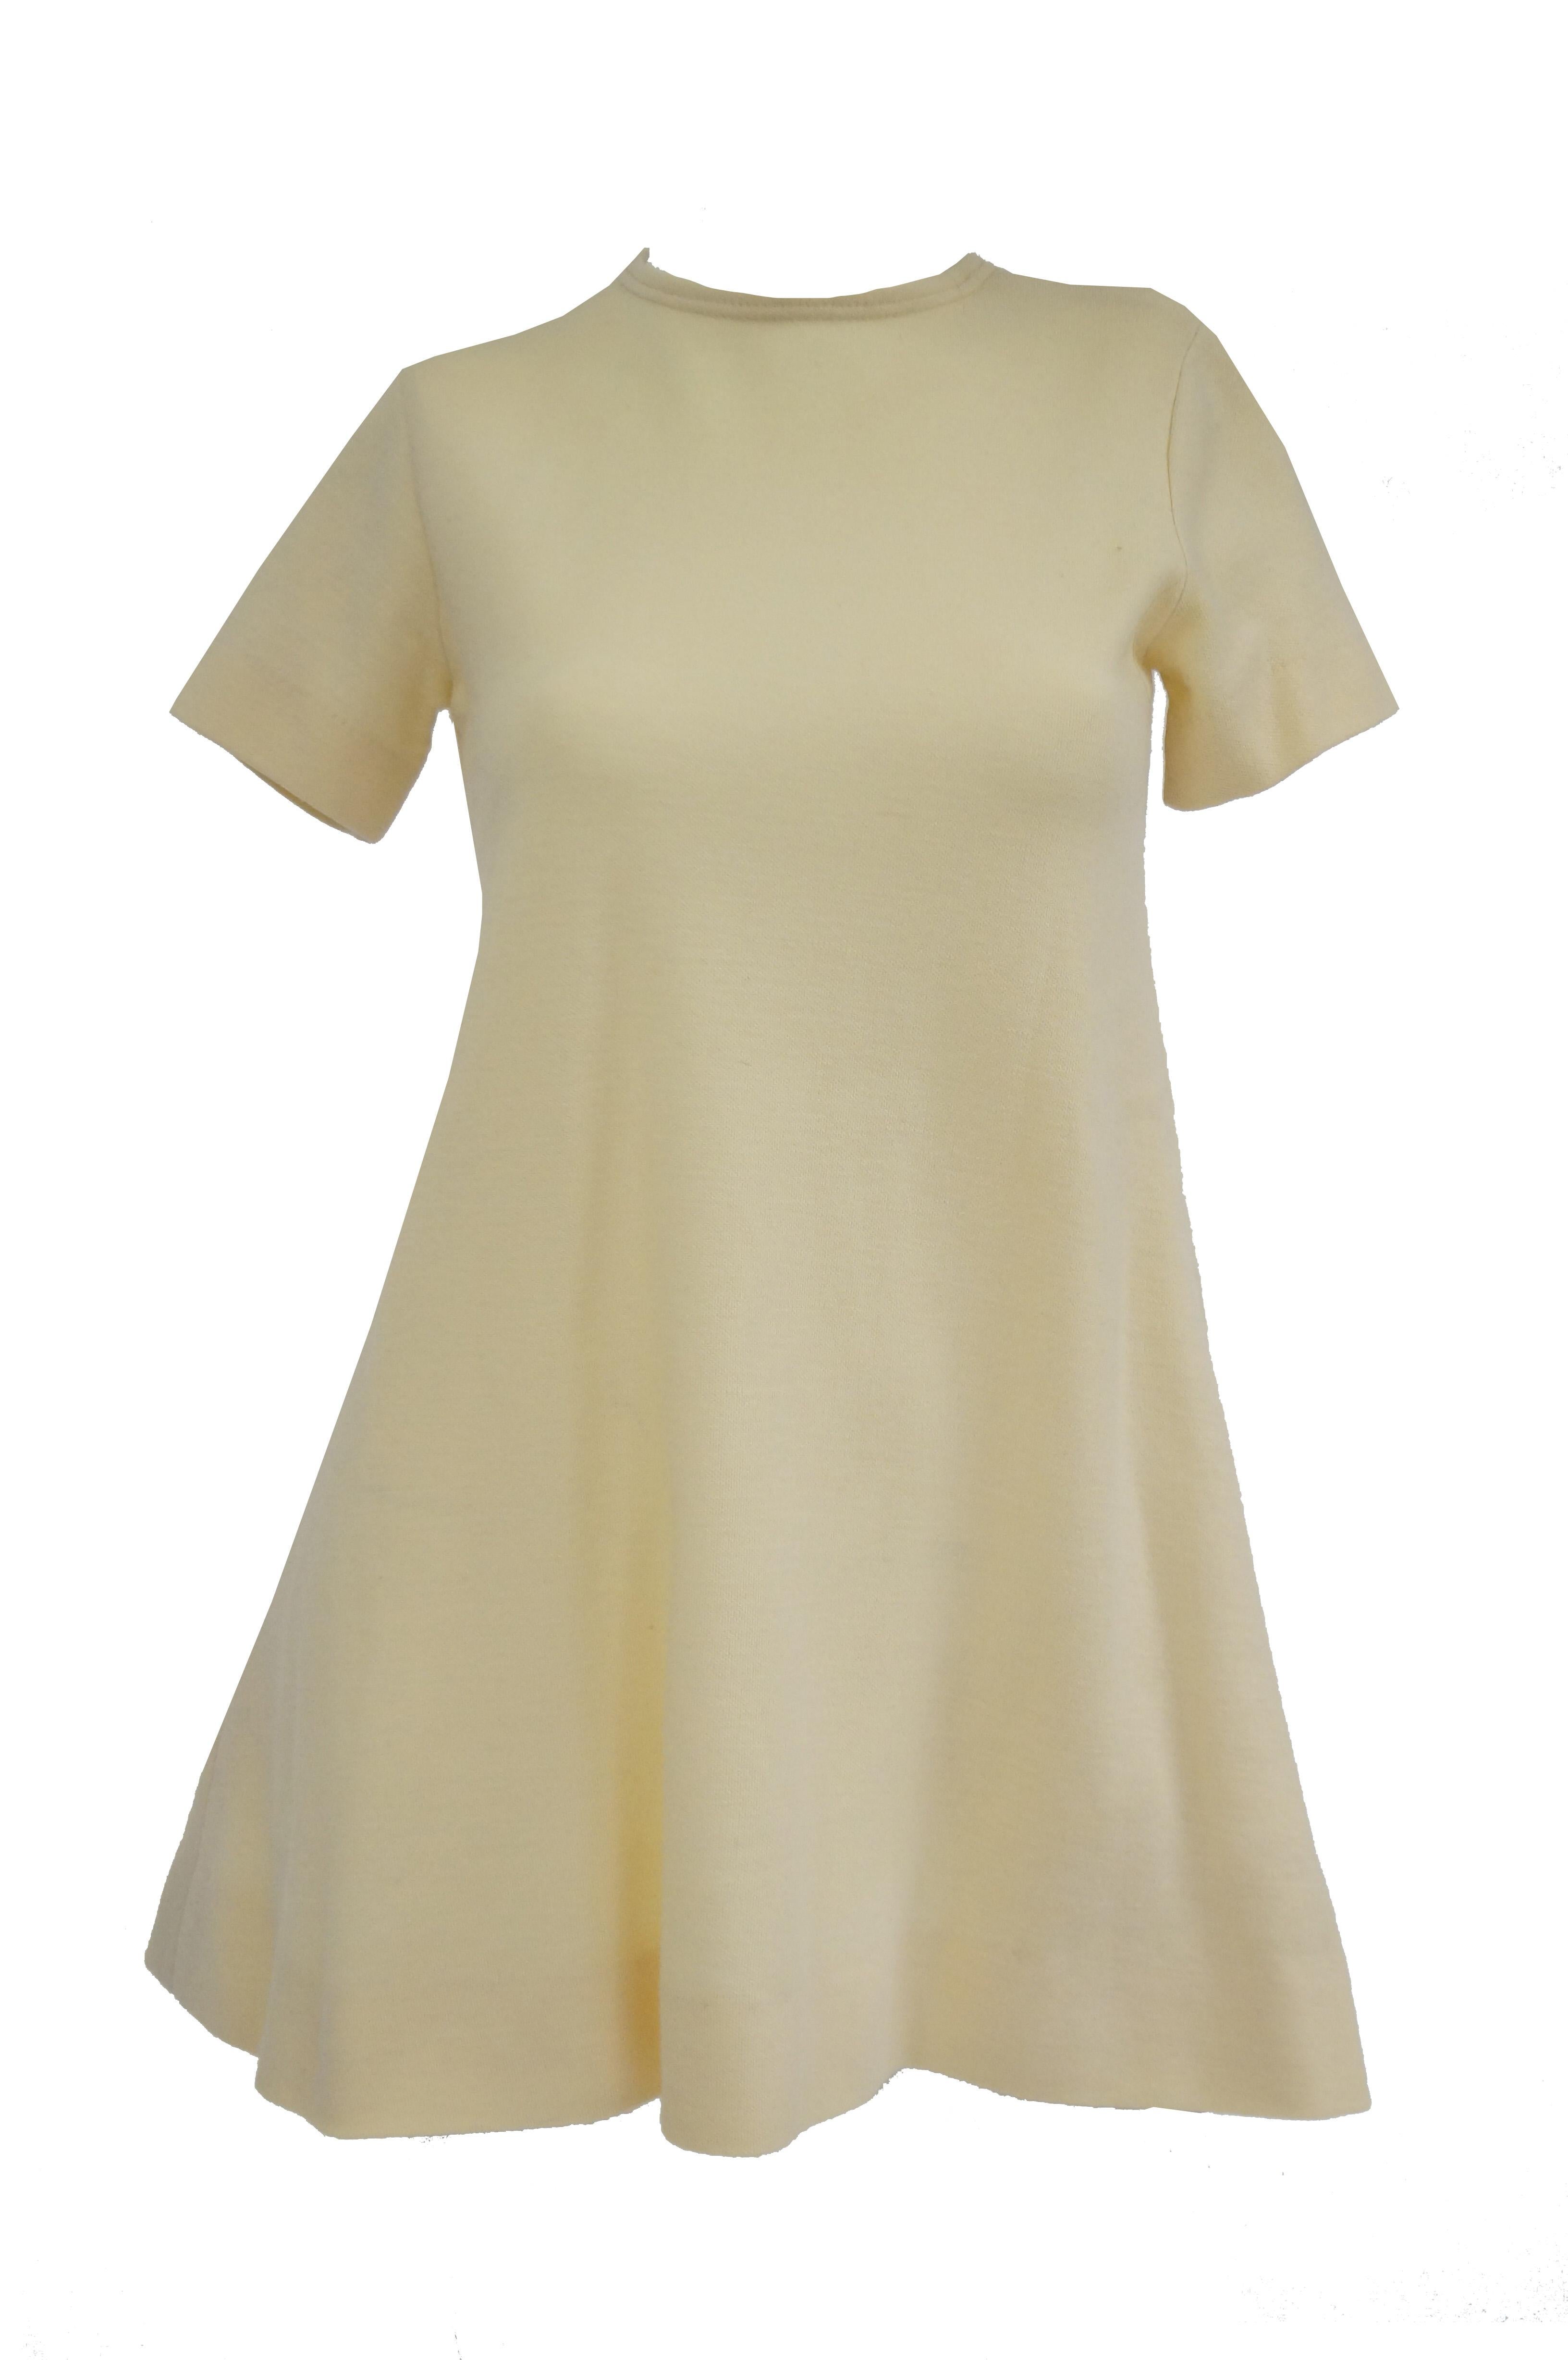 Iconic 1960s Rudi Gernreich Knitwear High Contrast Mini Dress Ensemble For Sale 1